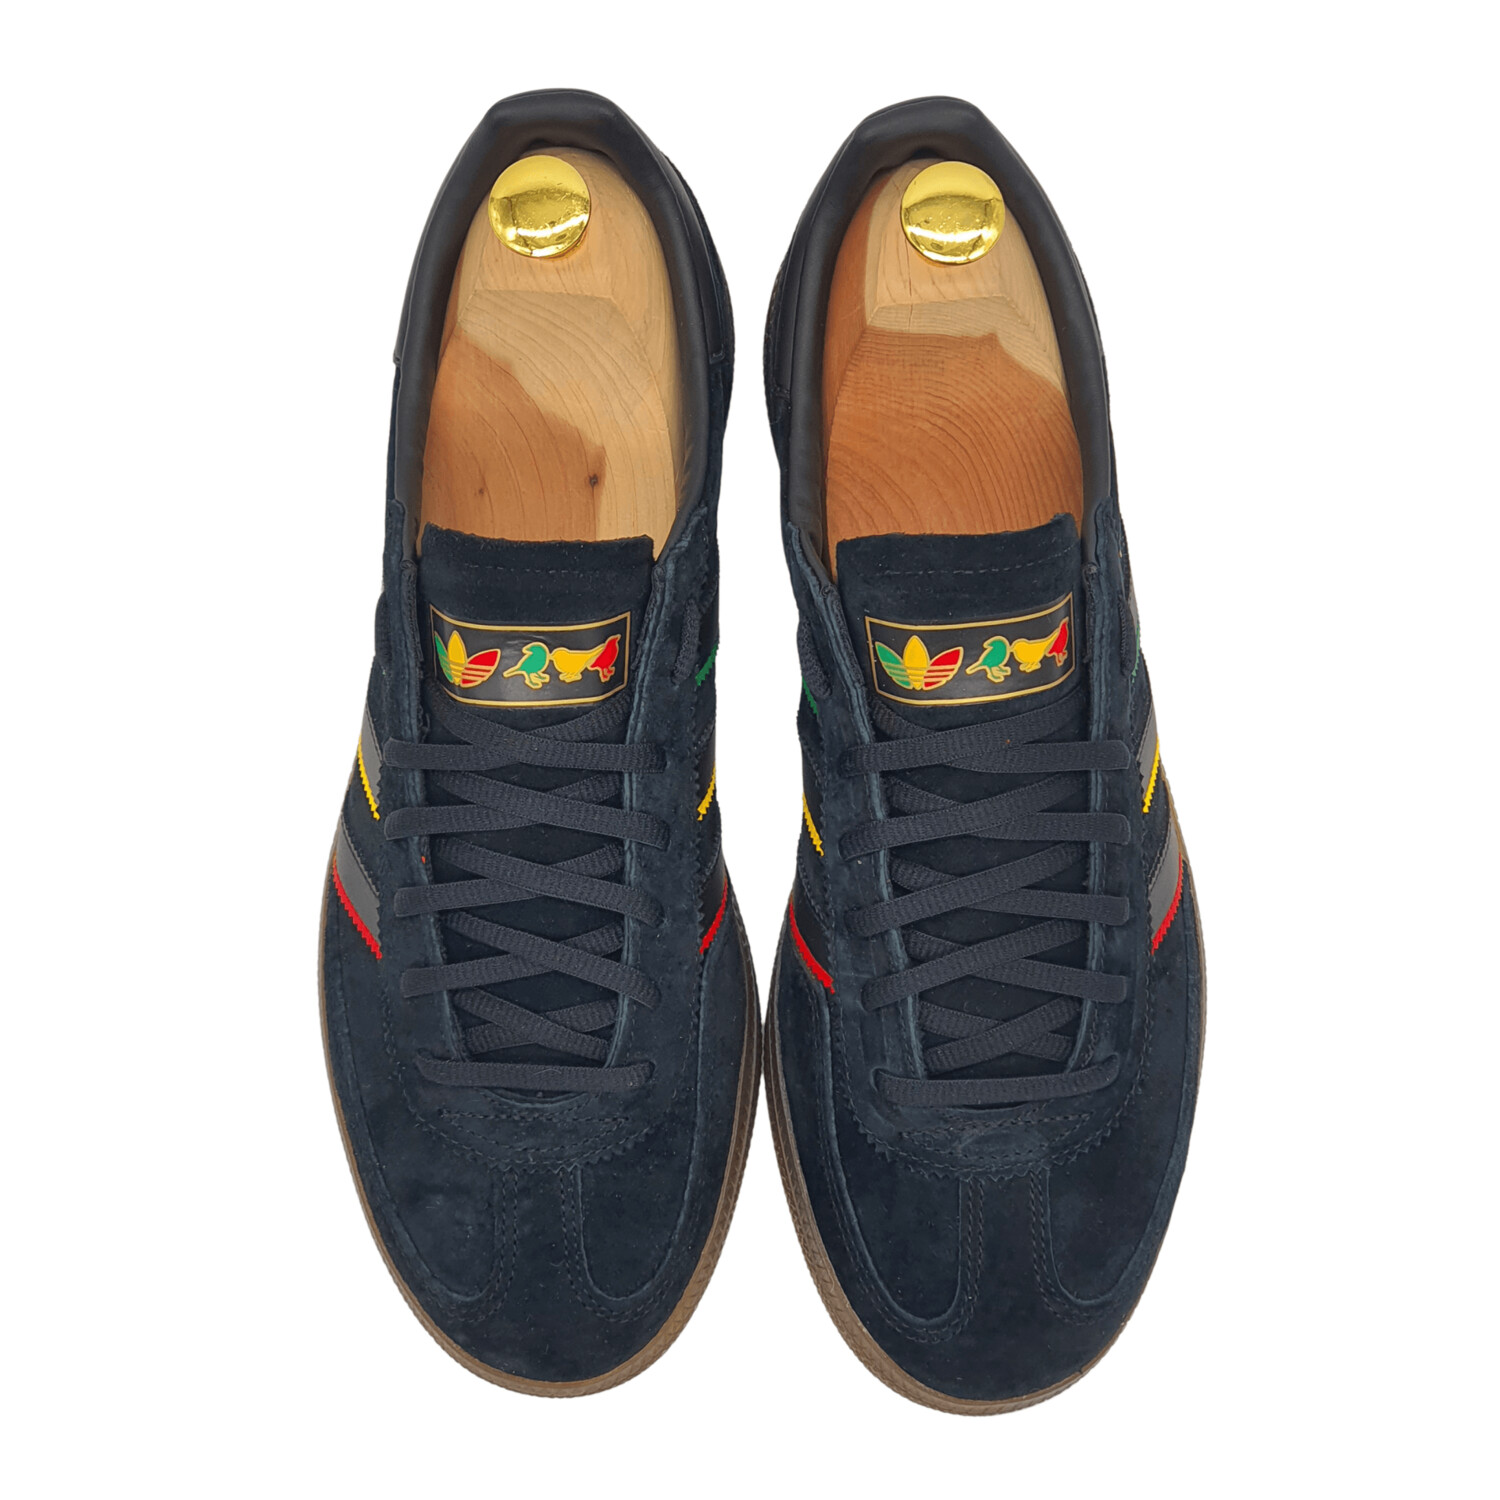 Three Little Birds - Bob Marley - adidas Custom - Handball Spezial